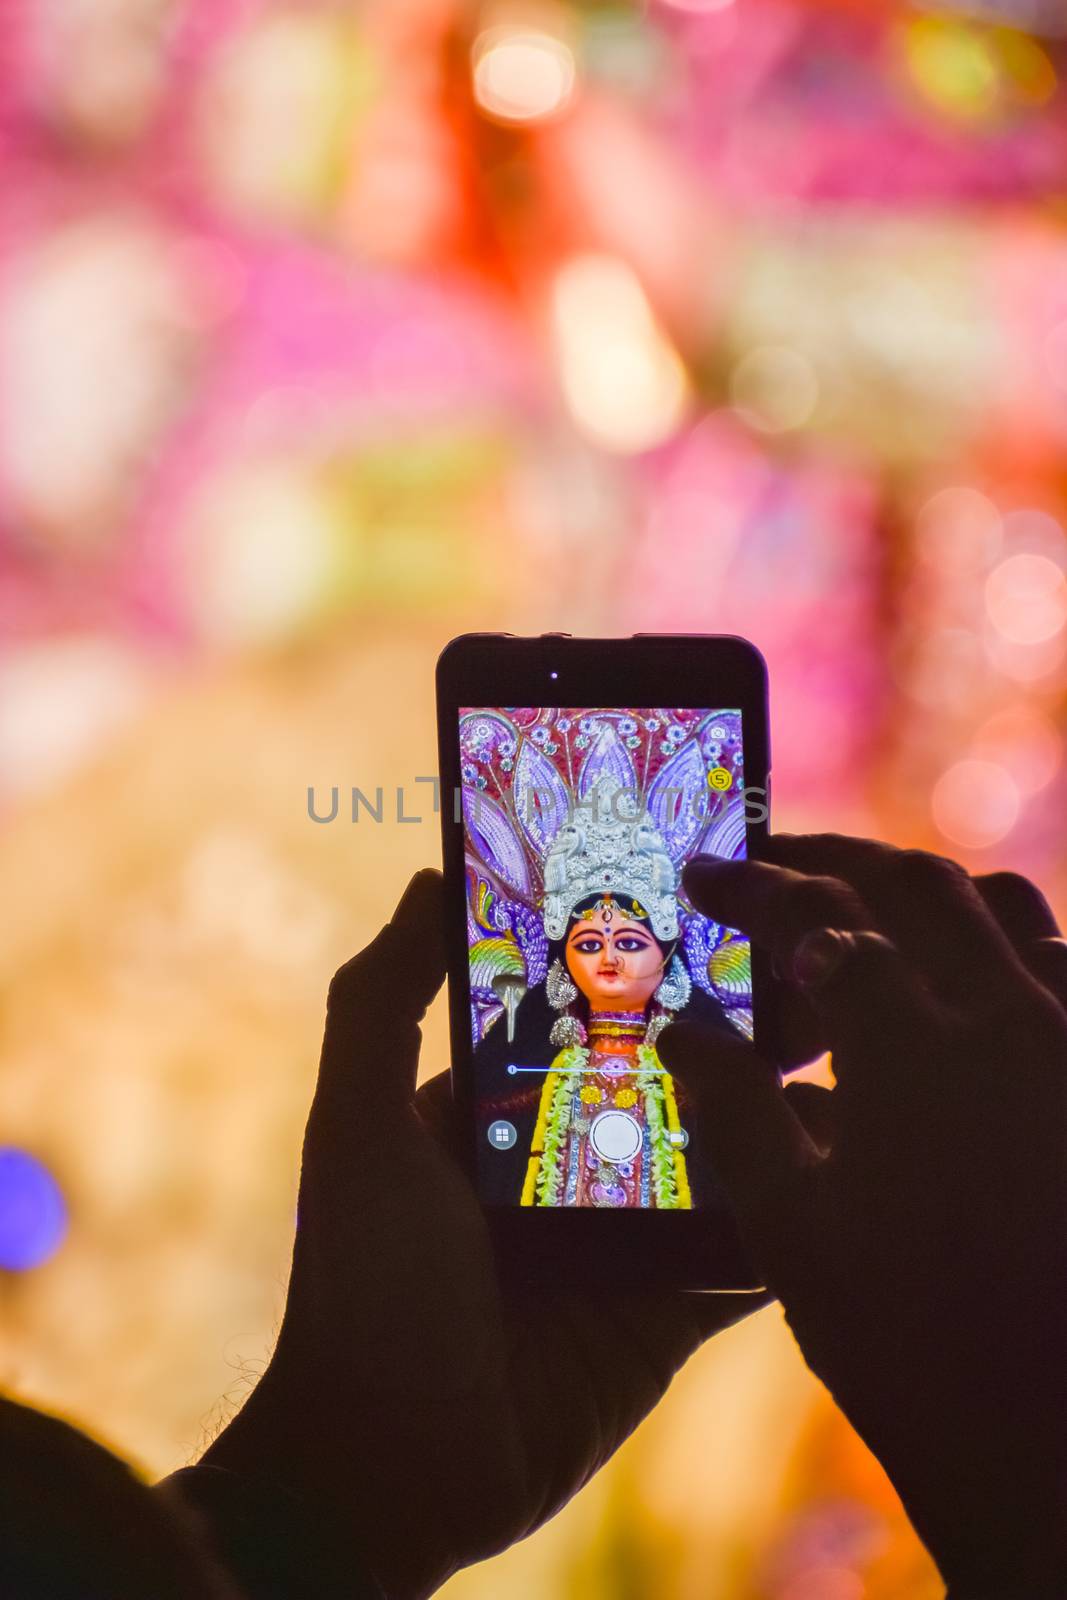 Capturing photograph of Durga Idol with Mobile phone during durga puja festival in kolkata.